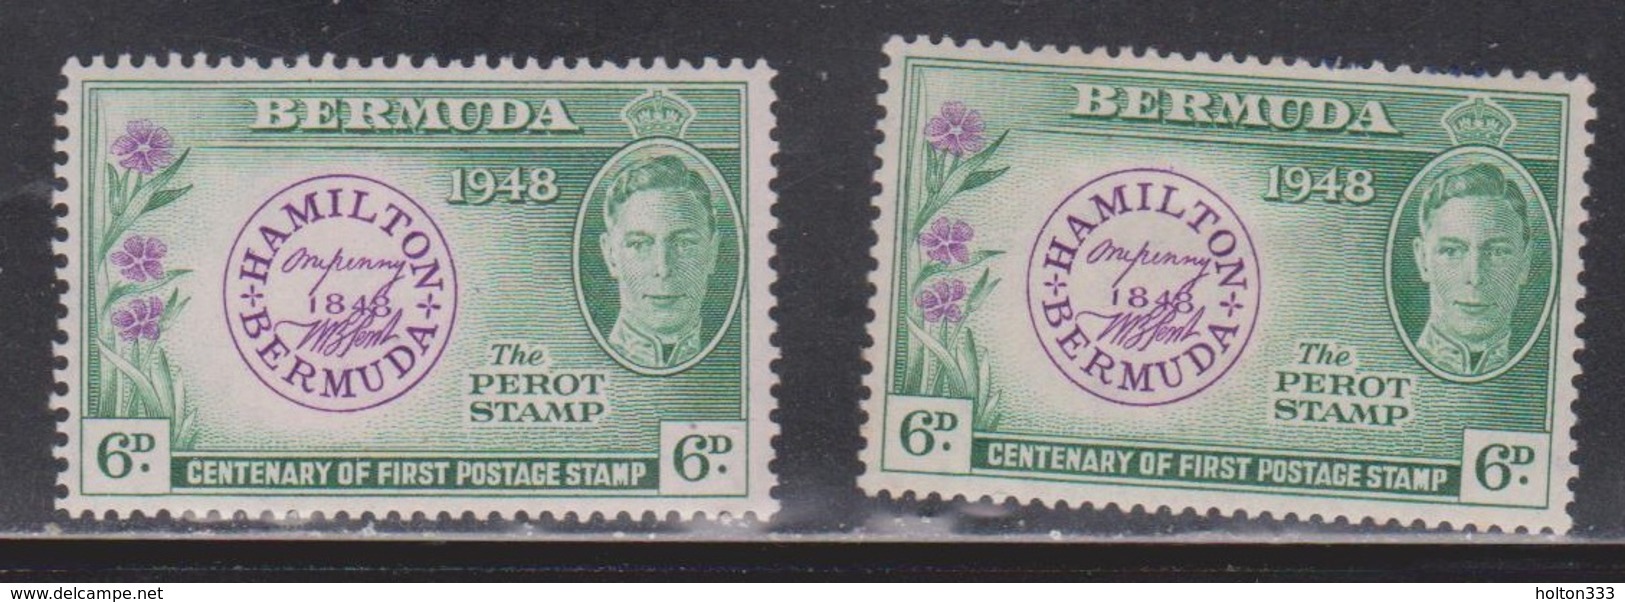 BERMUDA Scott # 137 MH X 2 - KGVI & Perot Stamp - Bermuda